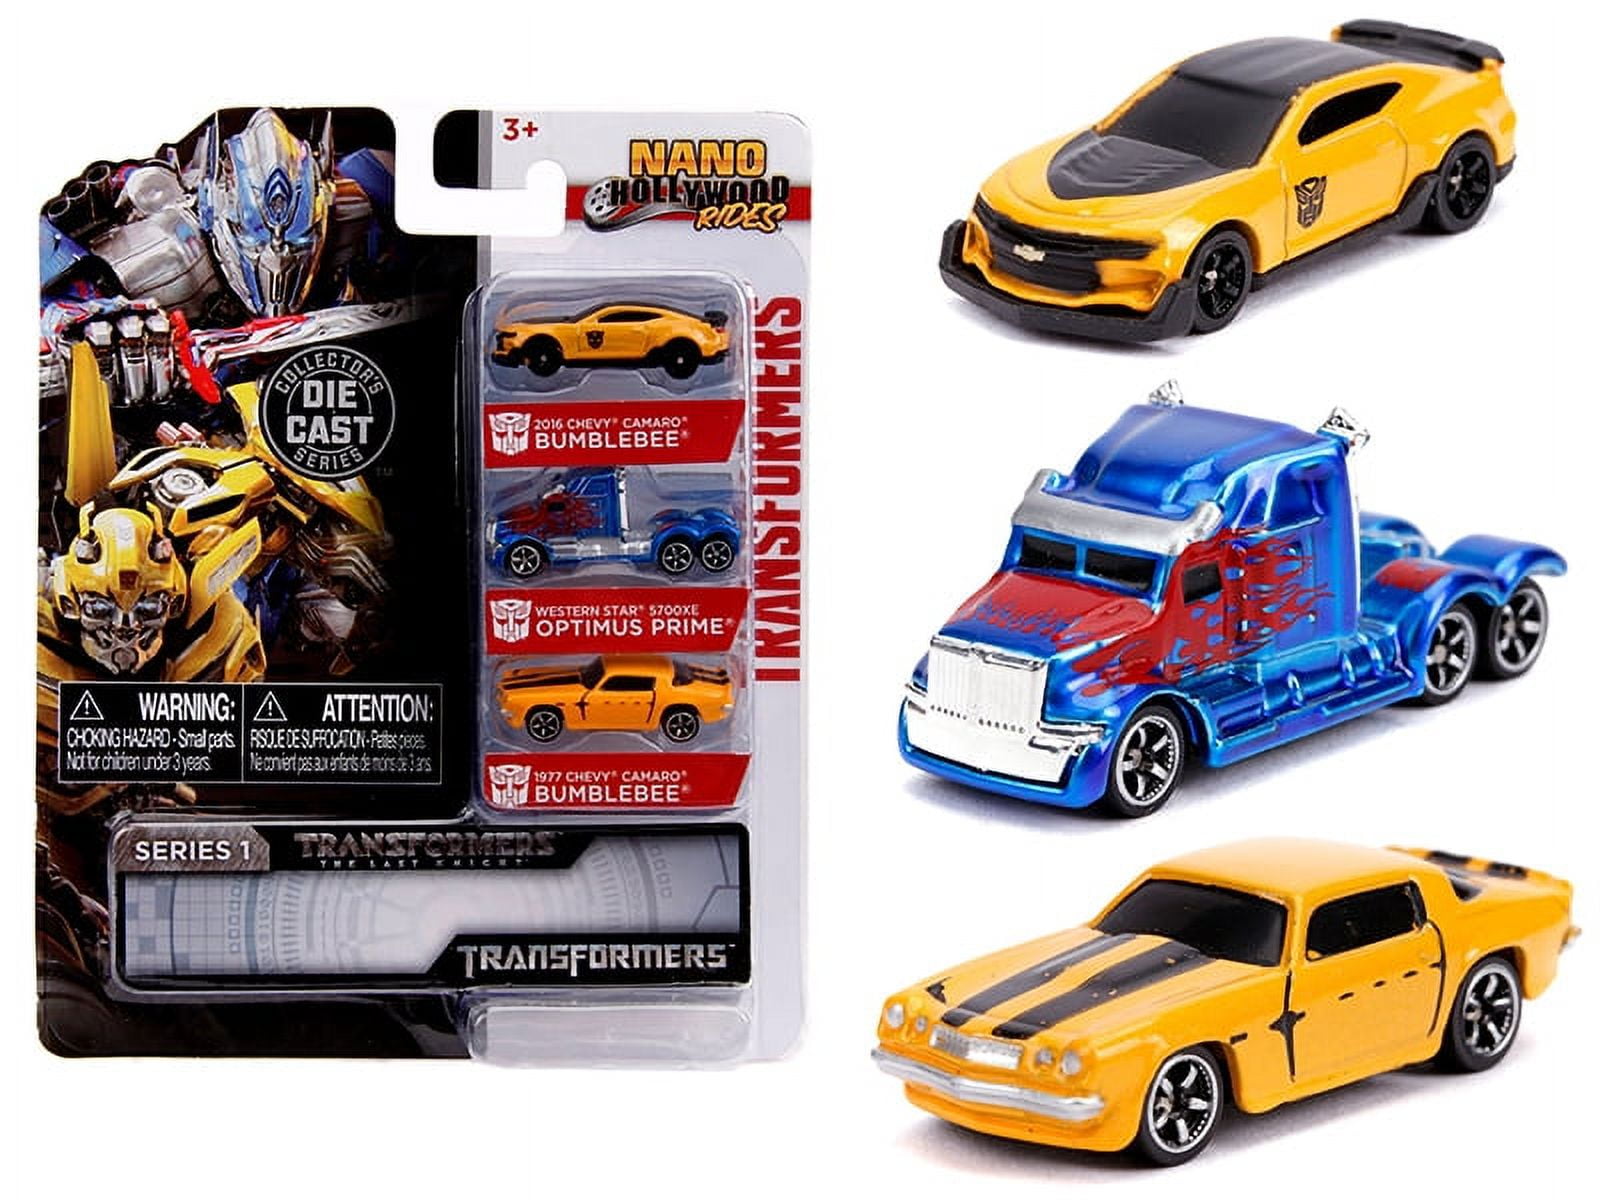 Jada 31125 Transformers Nano Hollywood Rides Series 1 Diecast Models - 3 Piece